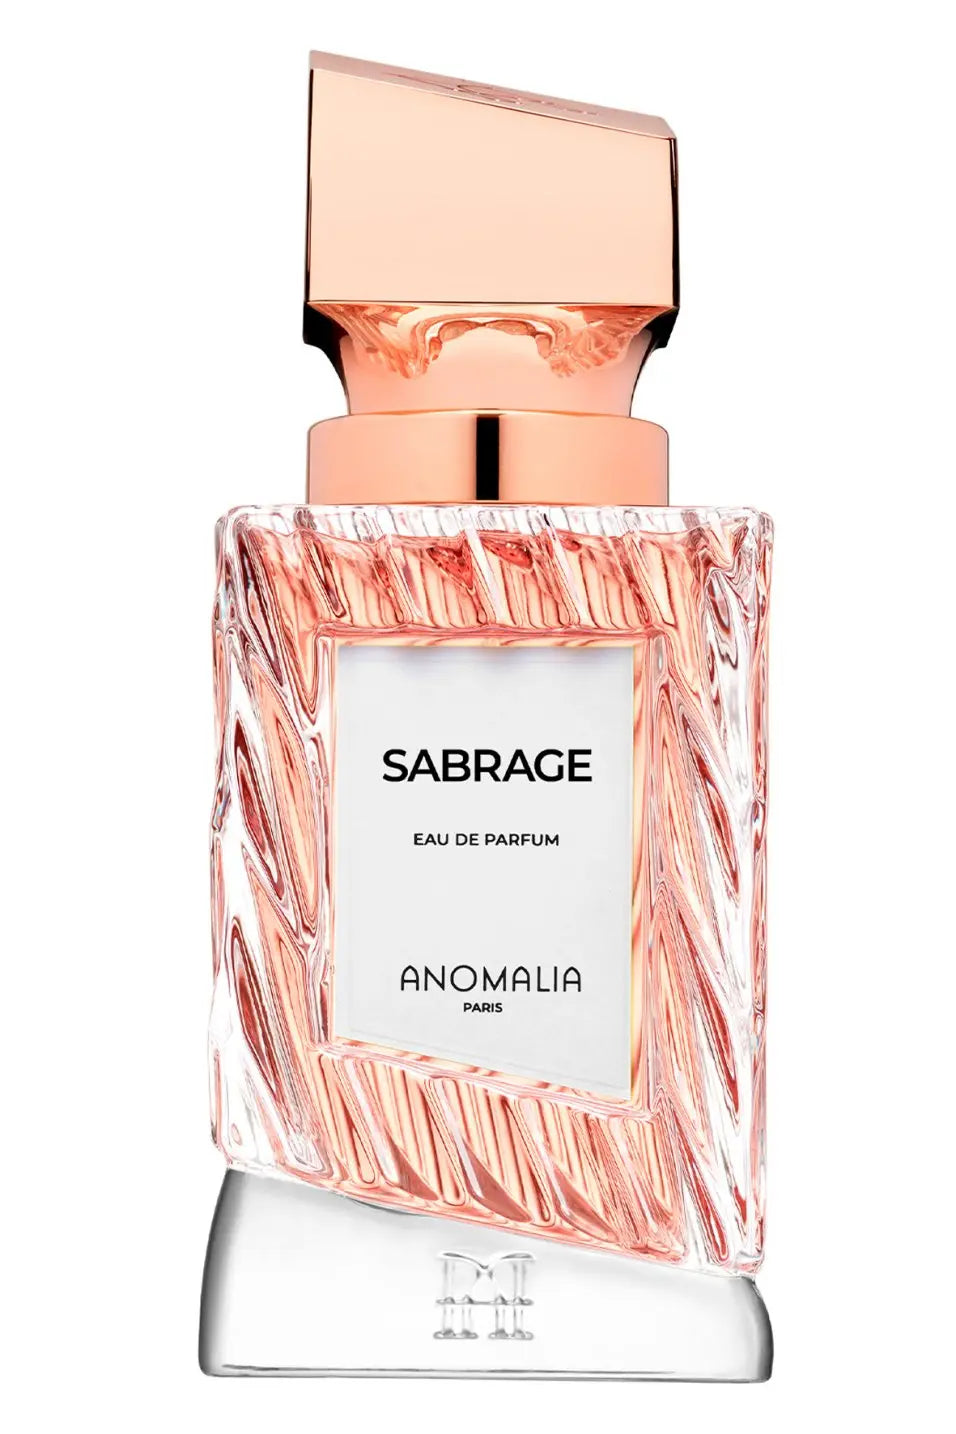 Anomalia Sabrage - 70 ml eau de parfum